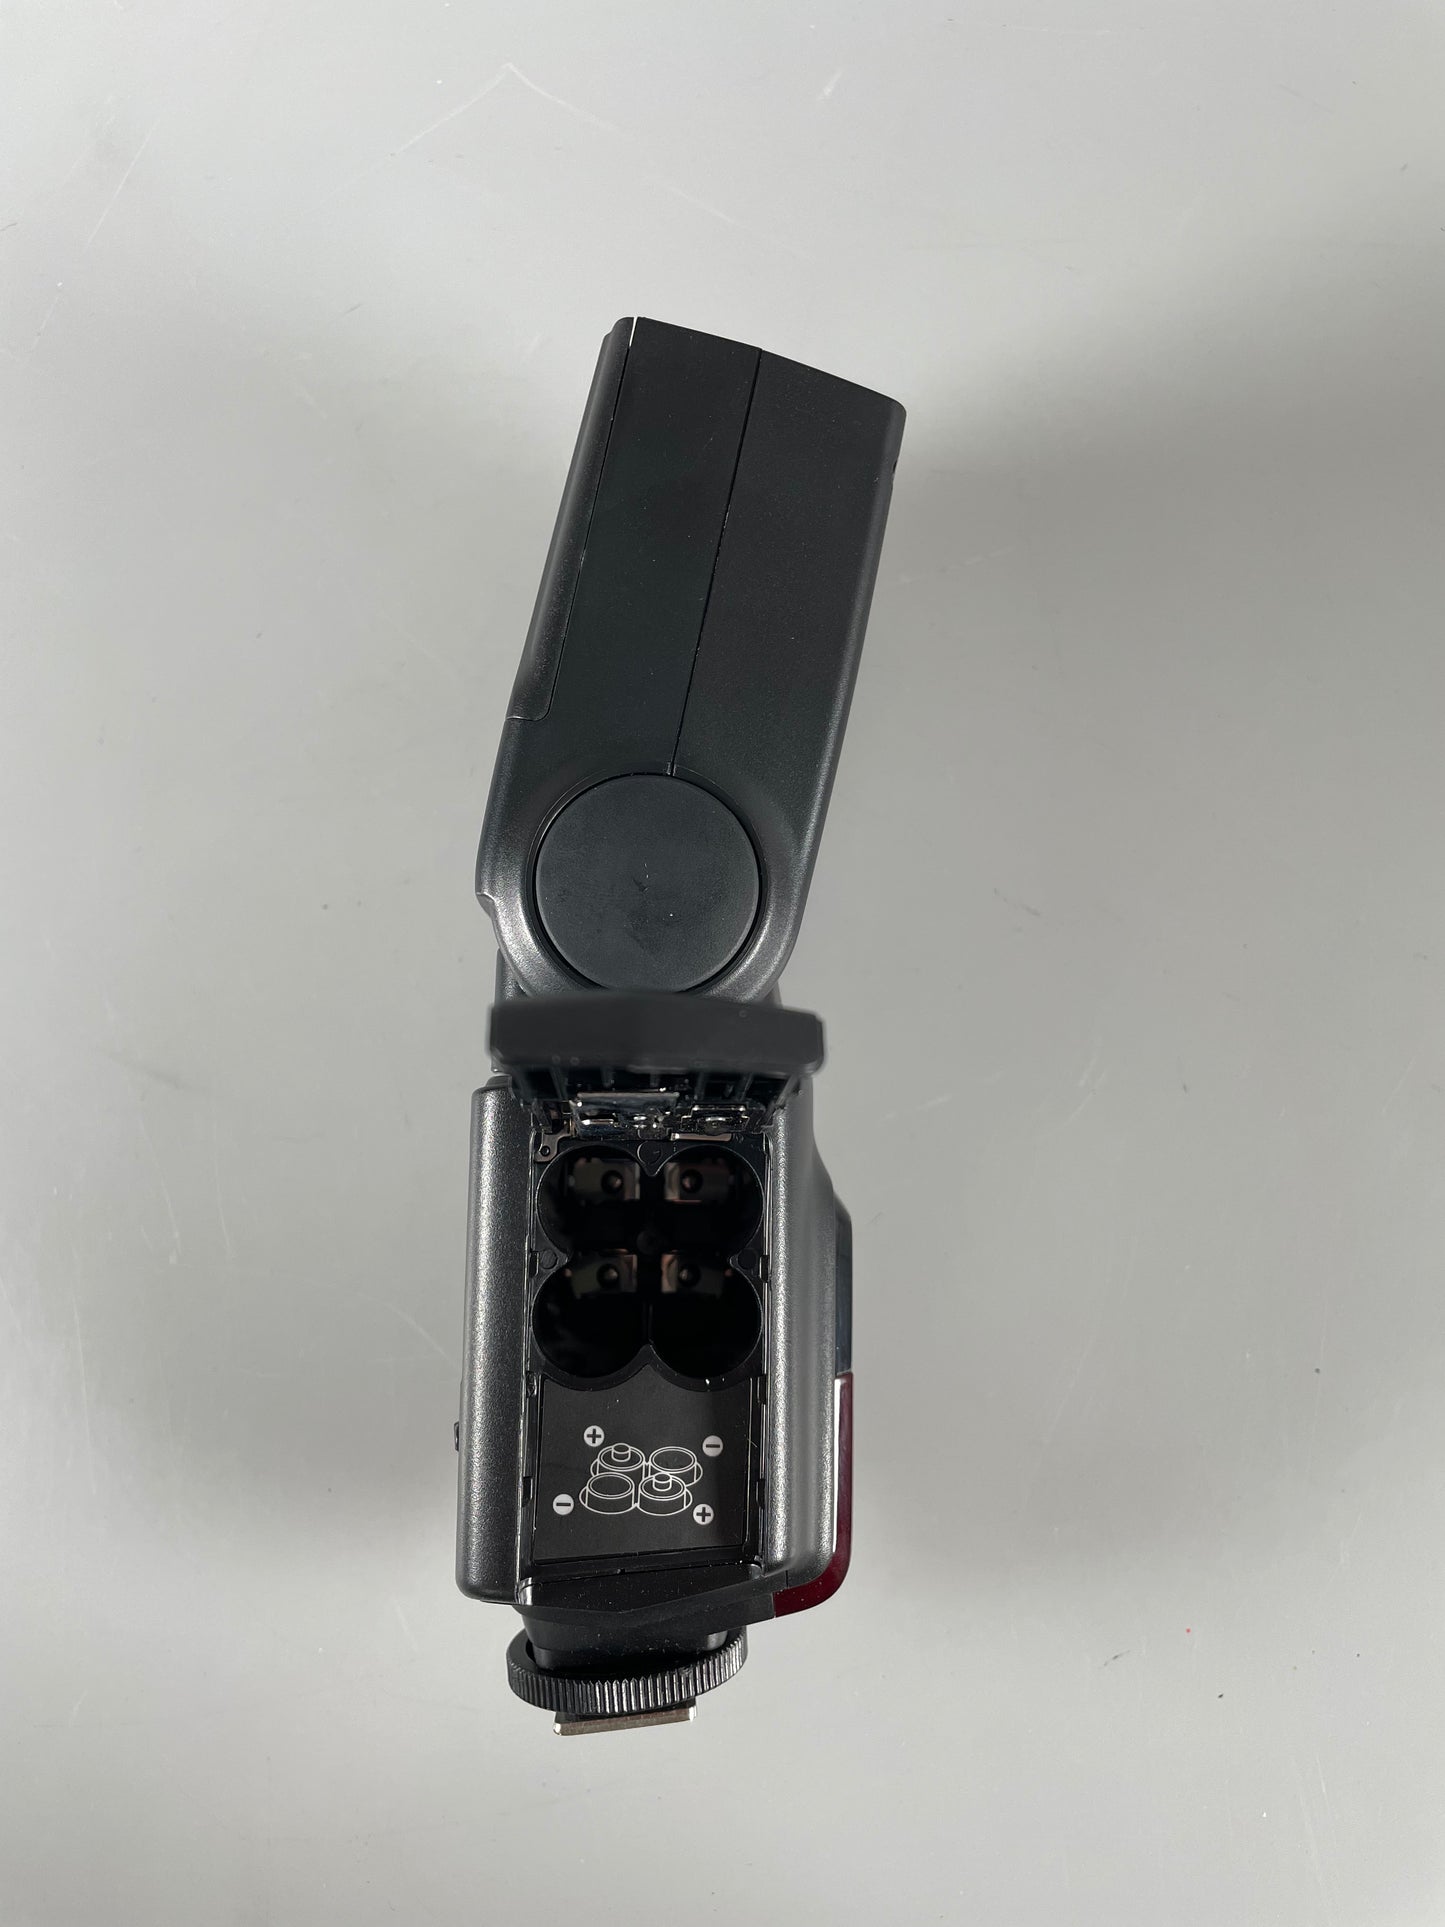 Neewer TT560 Flash Speedlite for DSLR Cameras with Standard Hot Shoe